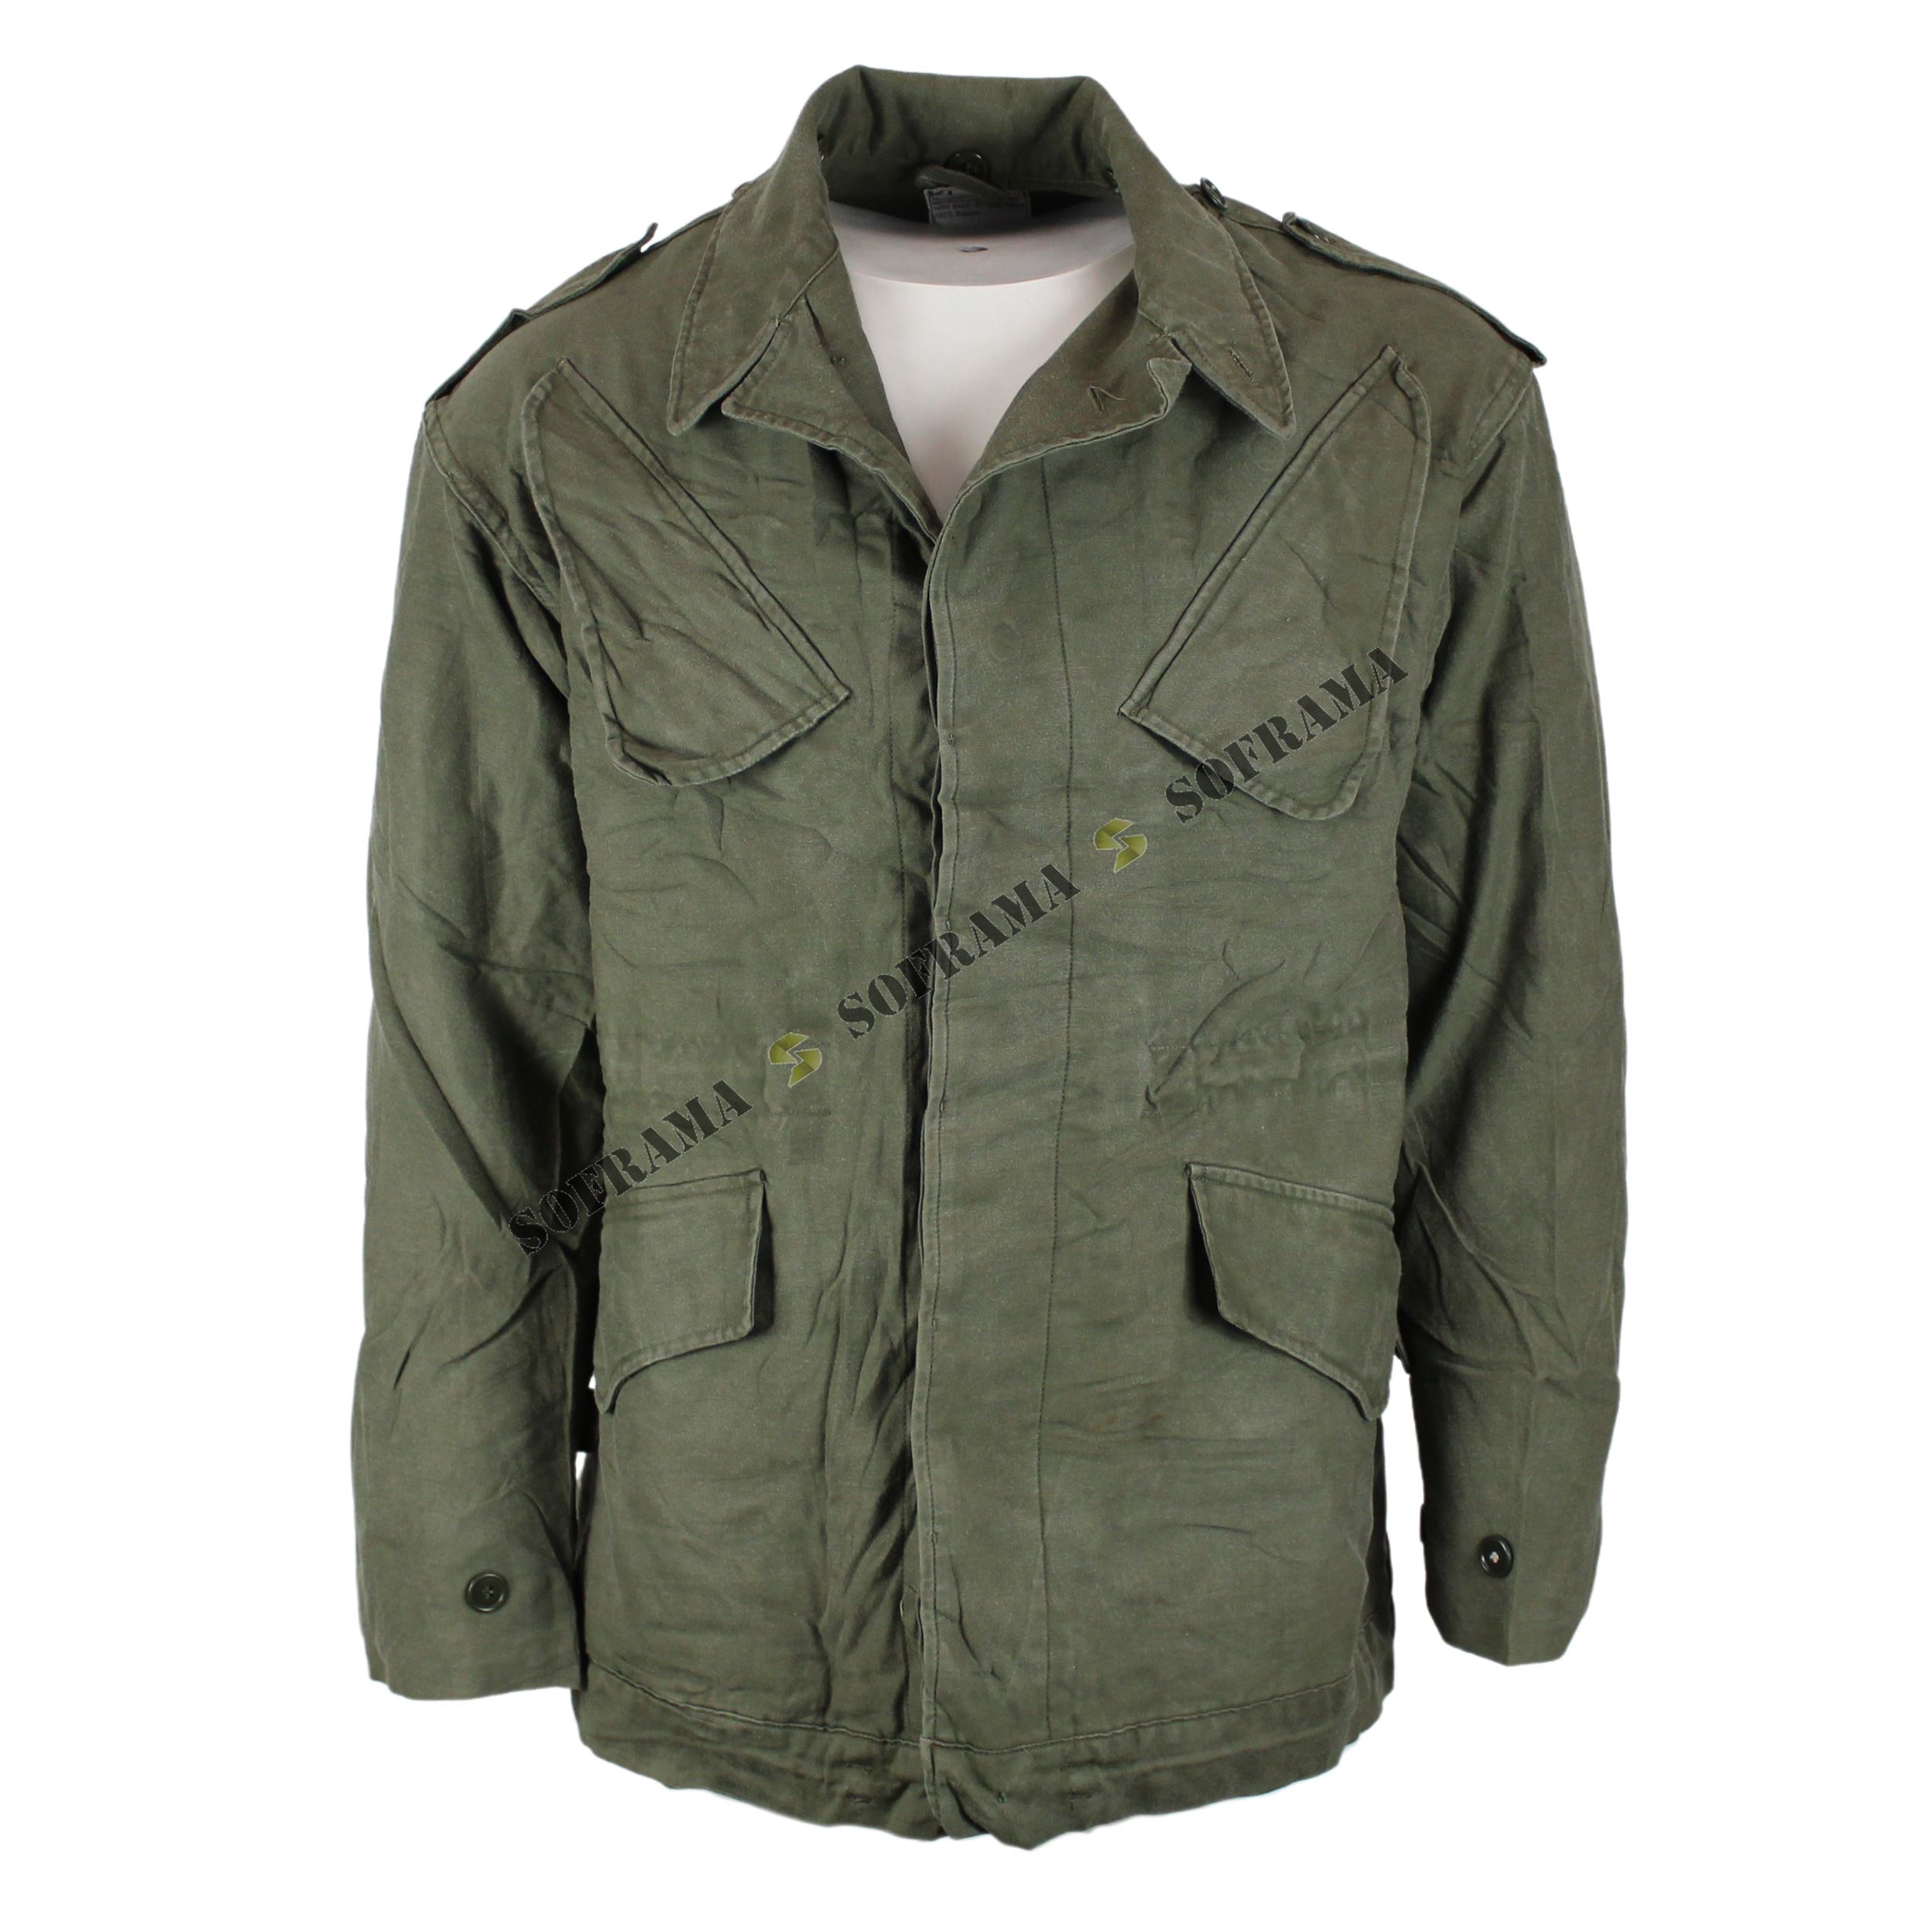 Dutch NATO jacket - Soframa